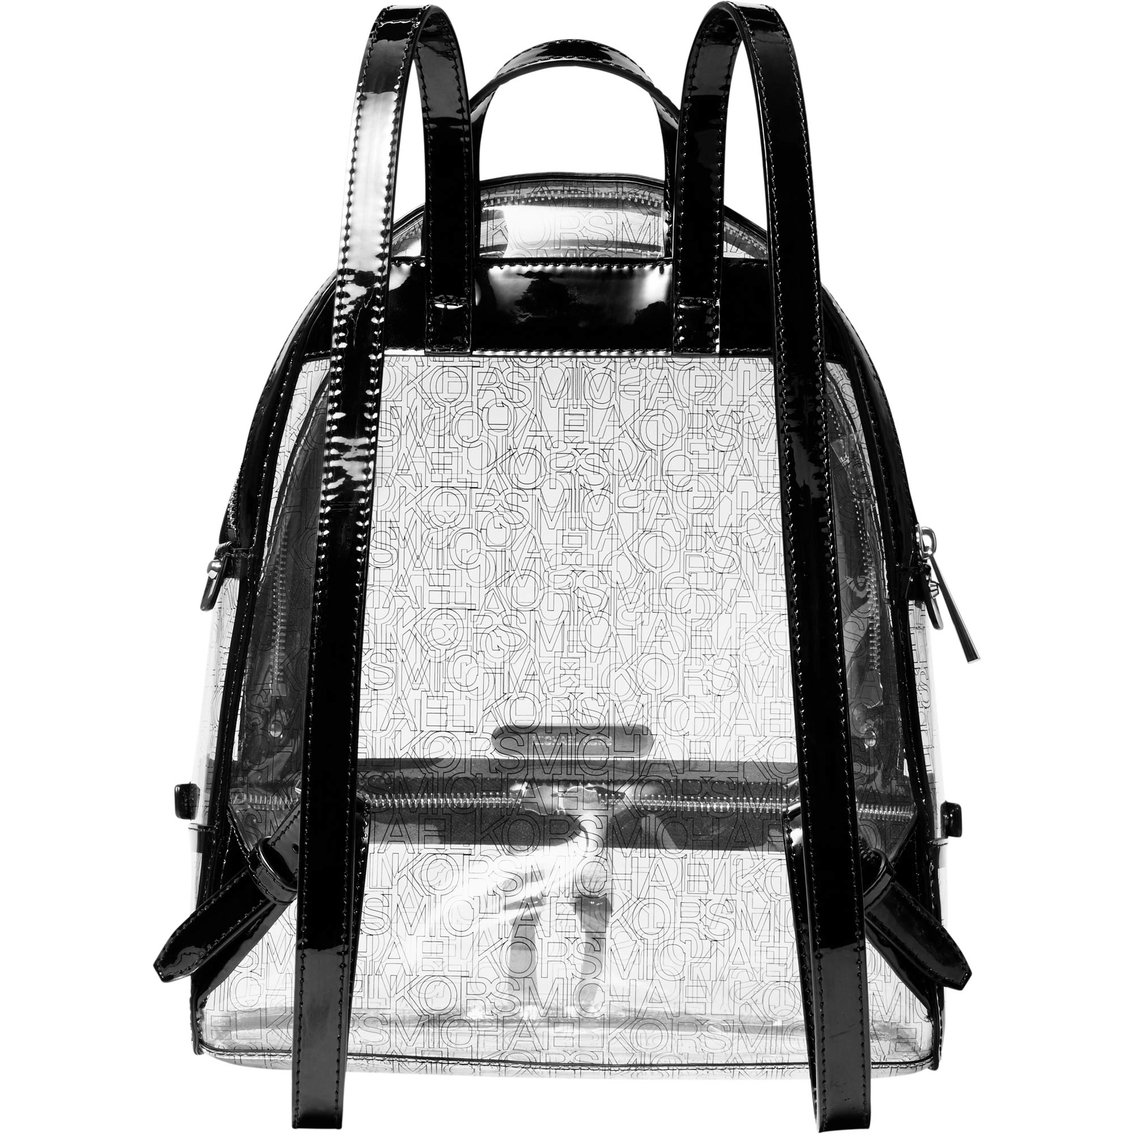 Michael Kors Rhea Zip Backpack Clear/black | Backpacks | Clothing ...